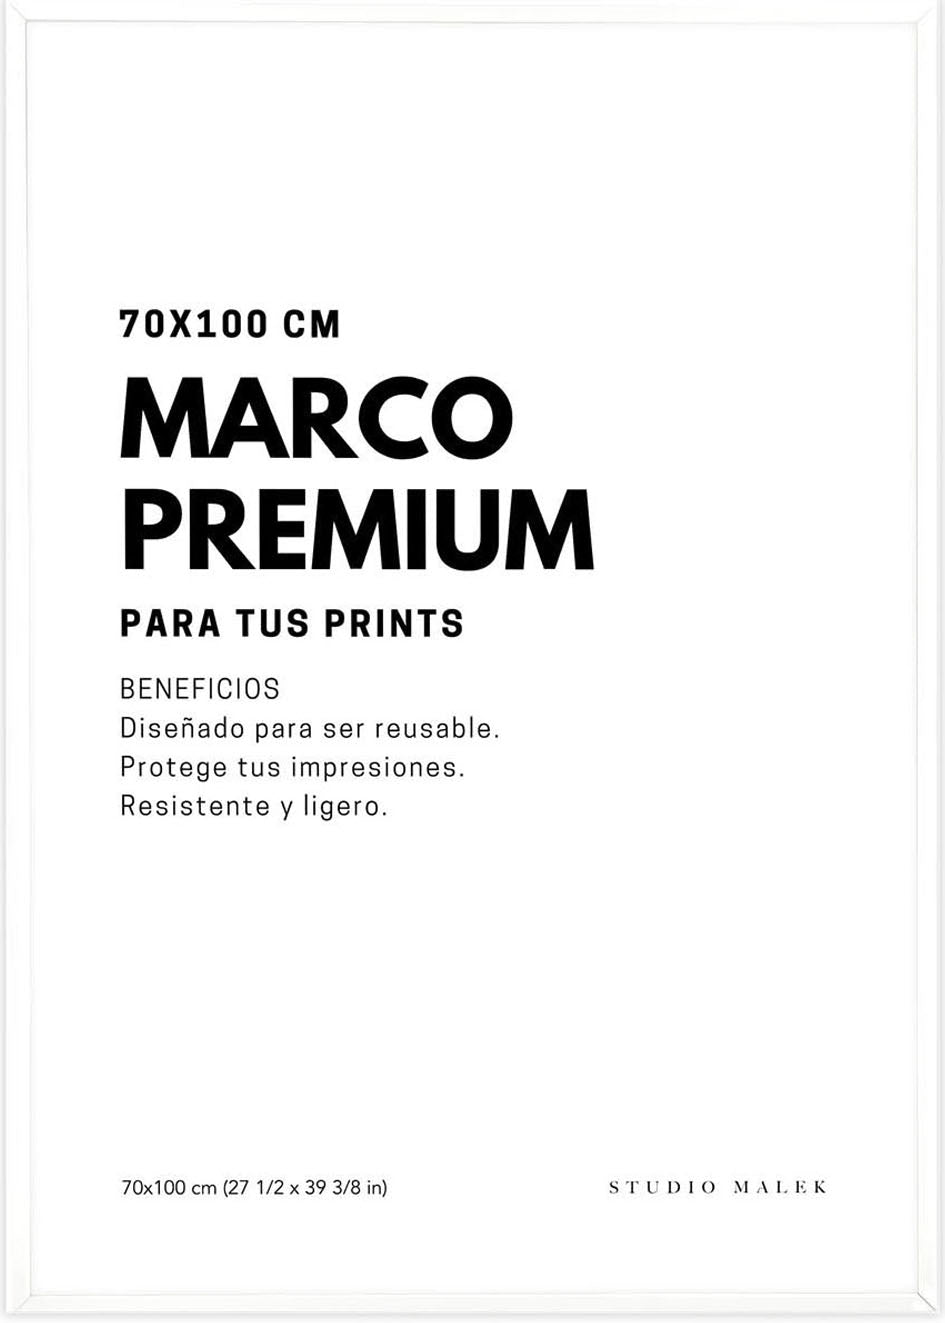 Marco para cuadro blanco 70x100 cm - Marcos